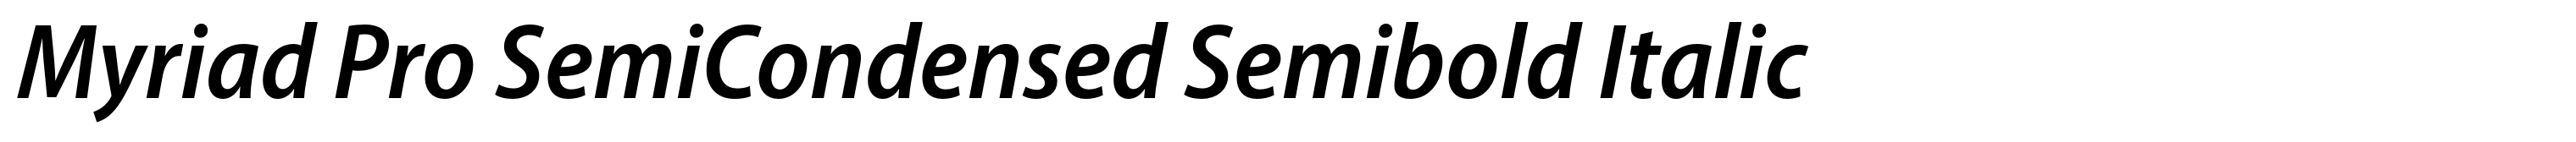 Myriad Pro SemiCondensed Semibold Italic